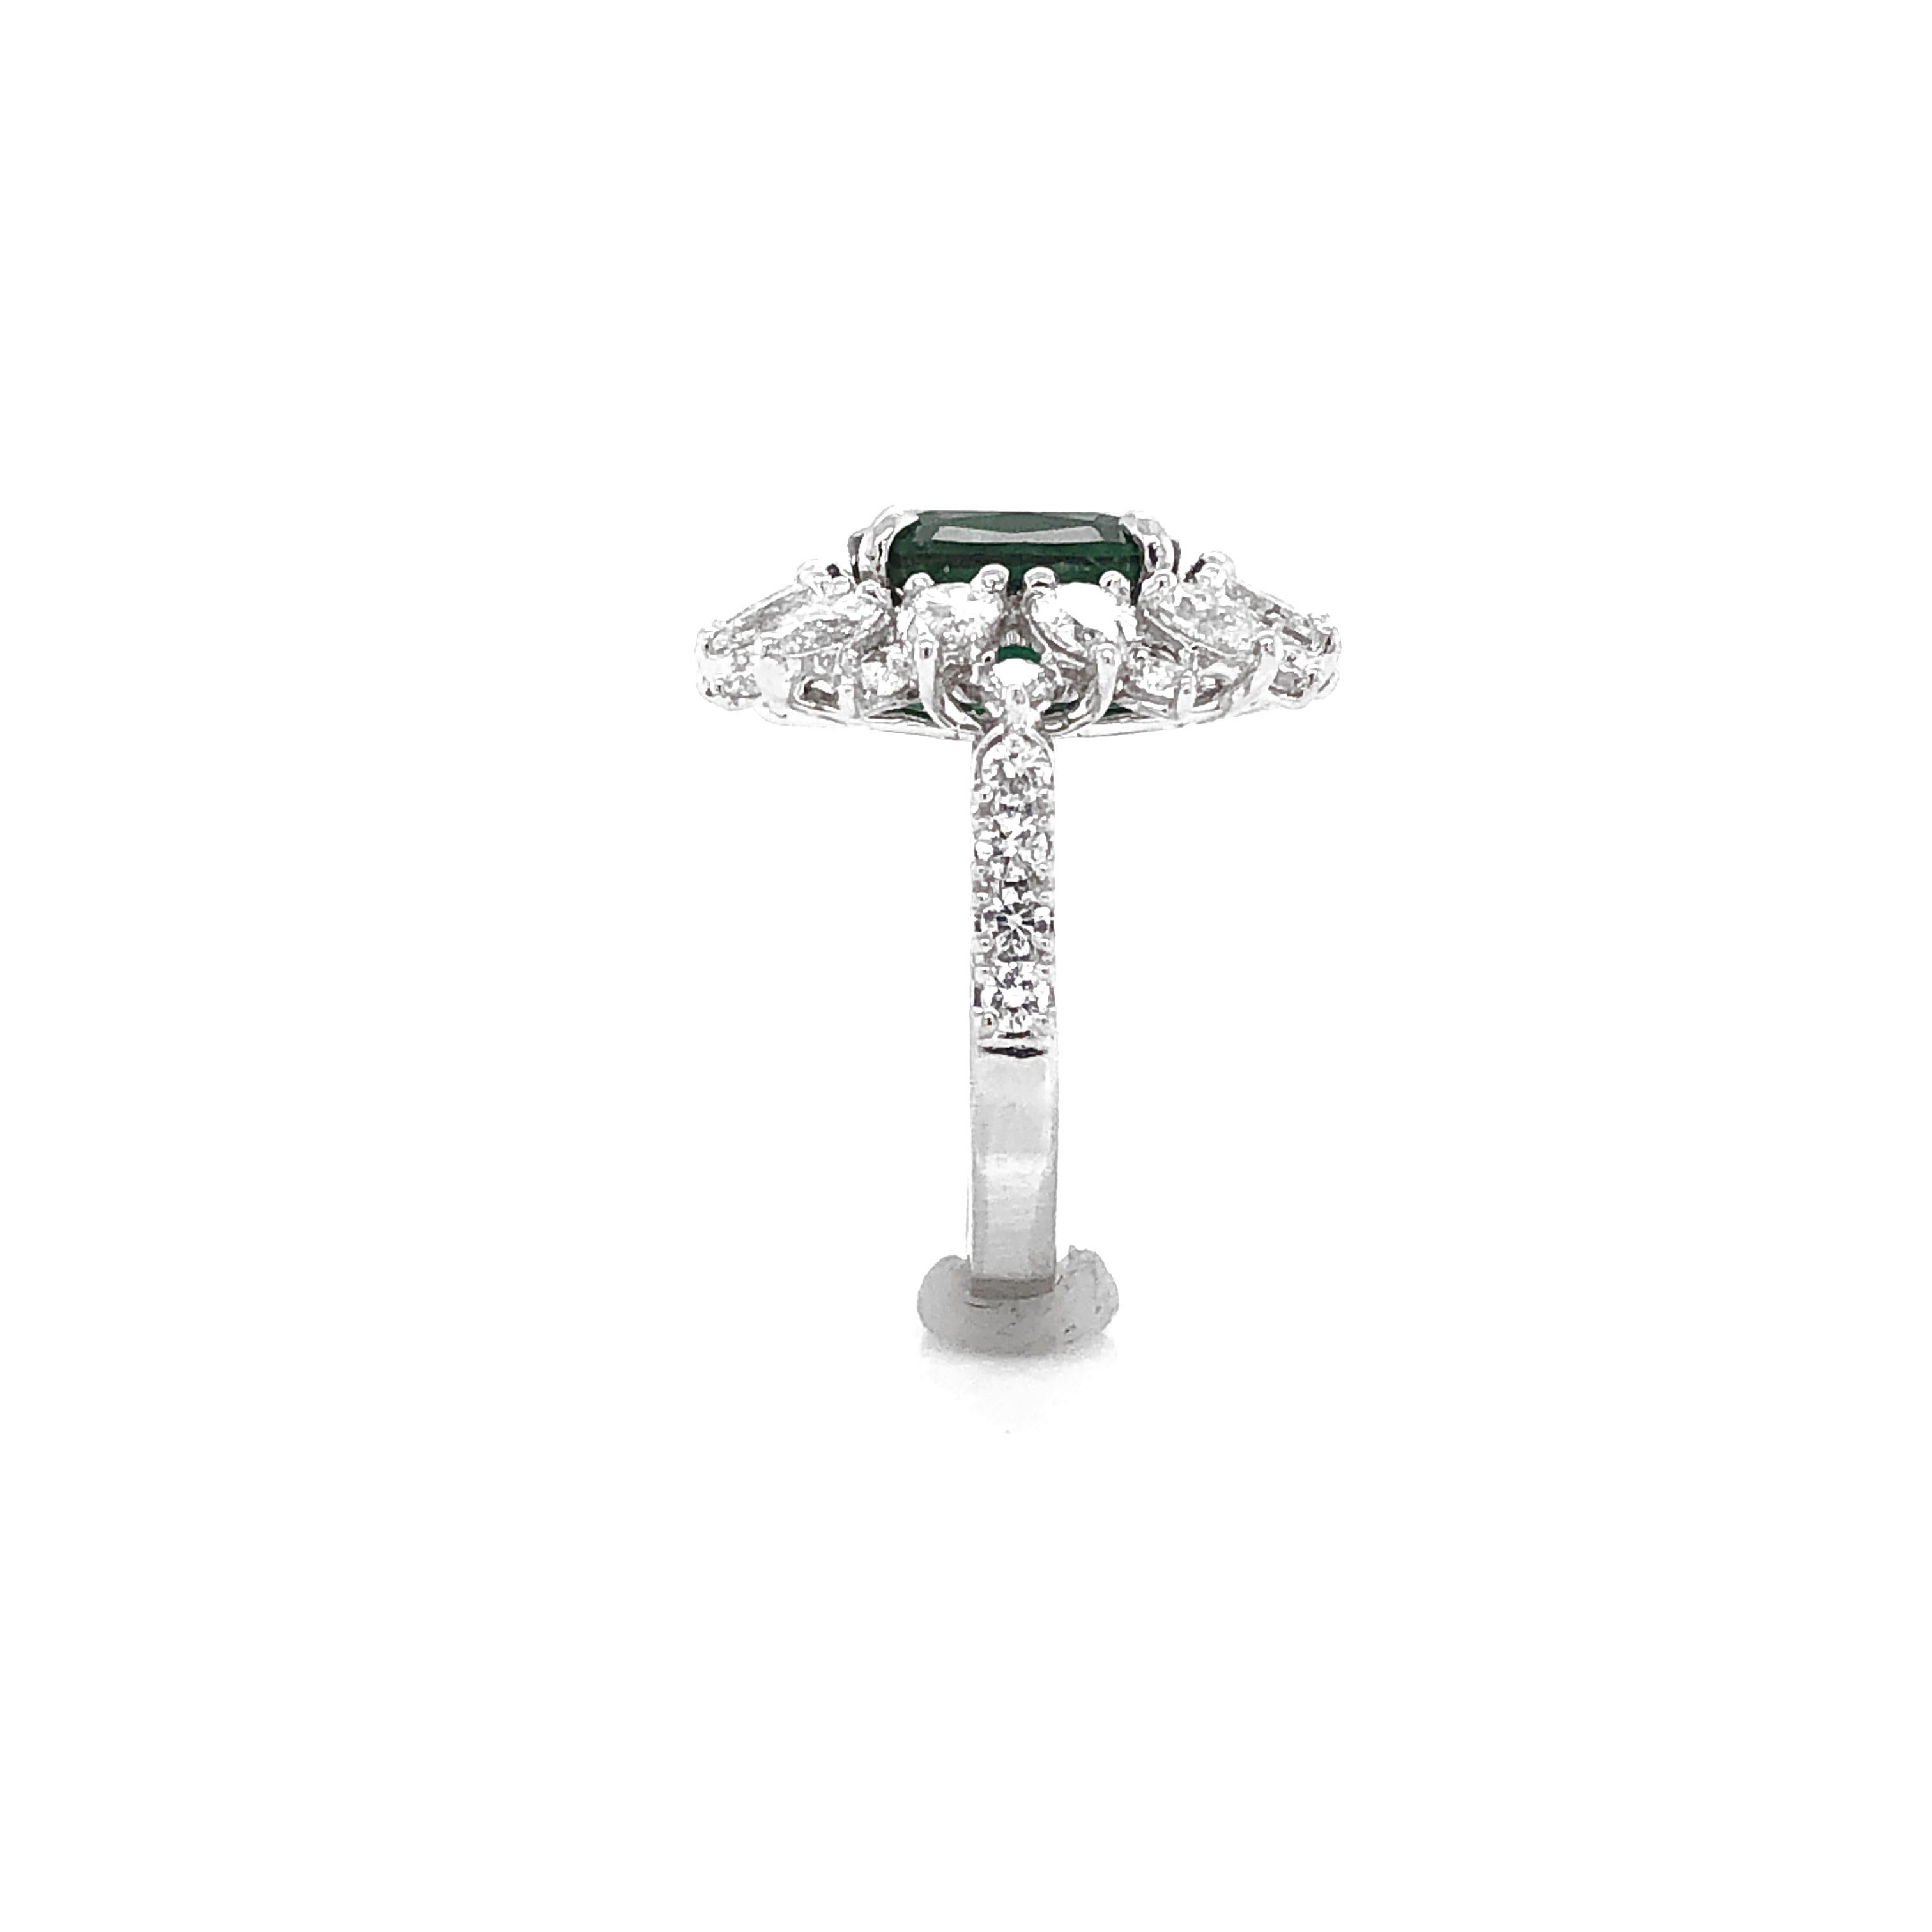 Certified Zambian Cushion Cut Emerald 3.13 Carat Diamond Platinum Cocktail Ring For Sale 4